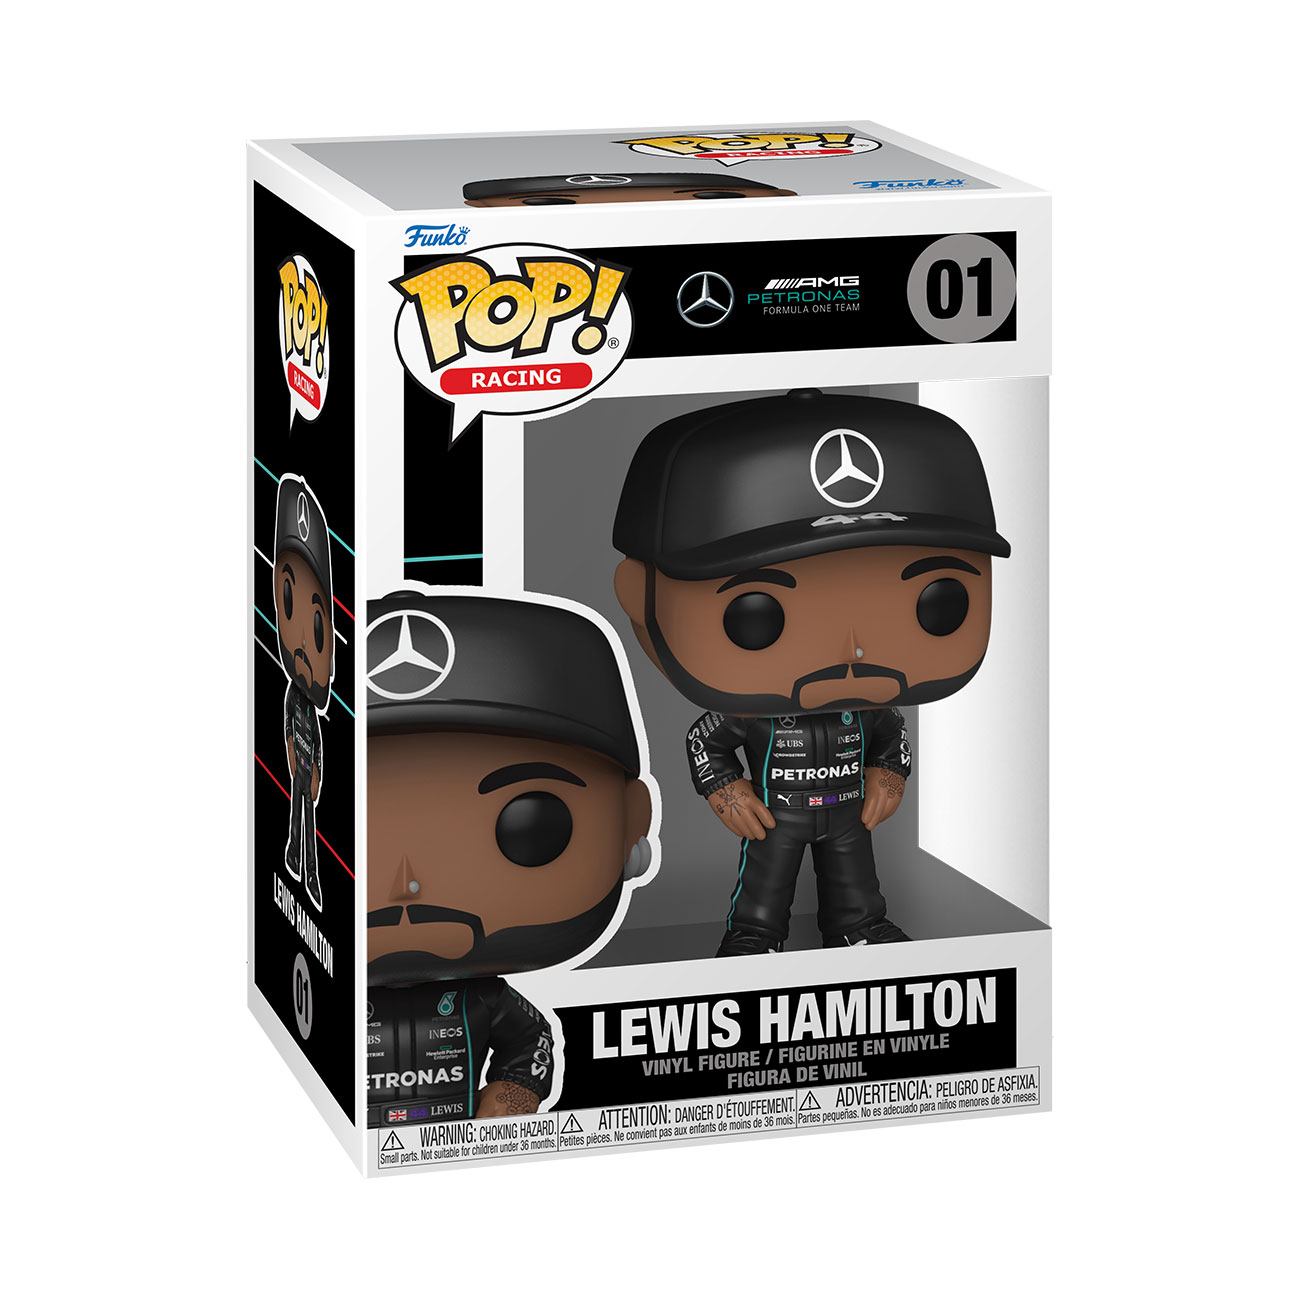 Formel 1 POP! Vinyl Figur Lewis Hamilton 9 cm